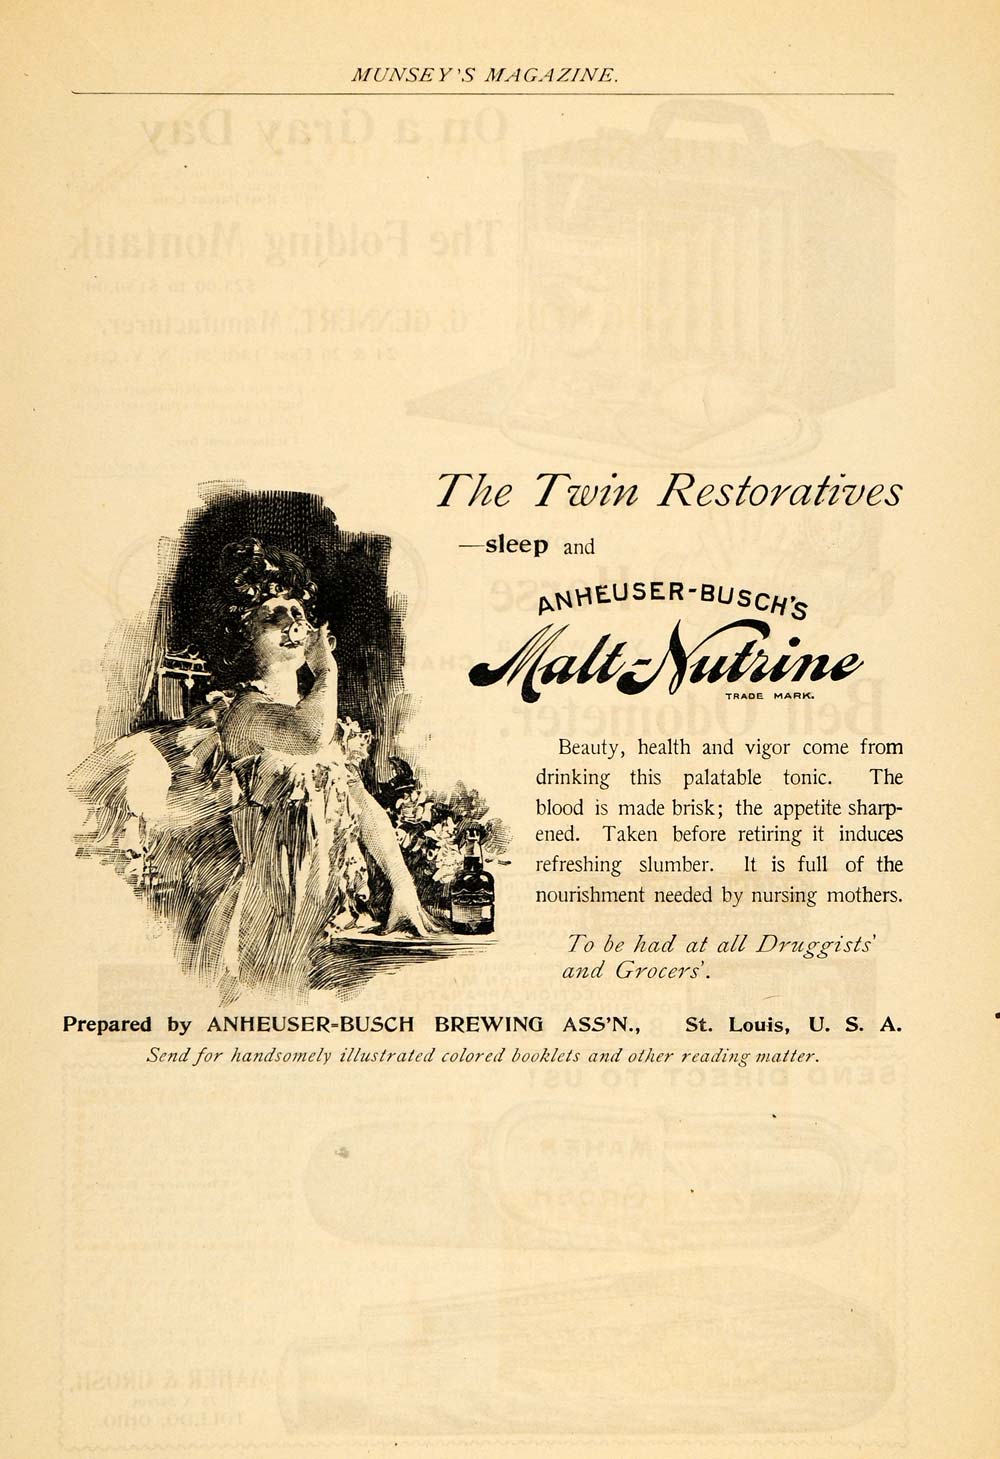 1895 Ad Twin Restoratives Anheuser Busch Malt Nutrine Health Drink Tonic MUN1